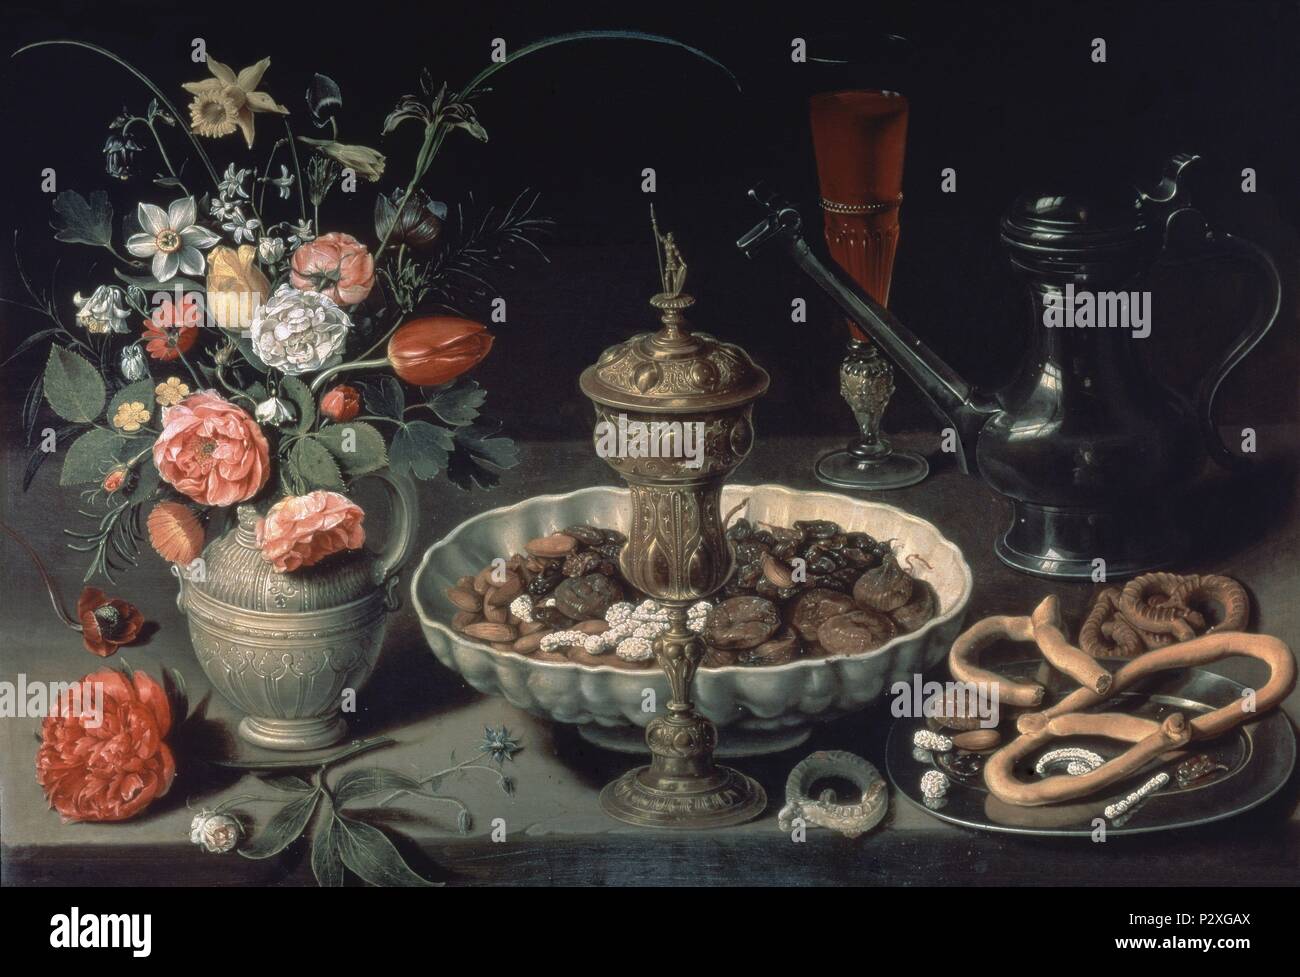 Still Life of Flowers and Dried Fruit - 1611 - 52x73 cm - oil on panel - Flemish school - NP 1620. Author: Clara Peeters (1594-c. 1657). Location: MUSEO DEL PRADO-PINTURA, MADRID, SPAIN. Also known as: MESA; BODEGON; BODEGON CON CARDO, FRANCOLIN, UVAS Y LIRIOS; NATURE MORTE AVEC TOURTE, POULETS ROTIS ET OLIVES; BODEGON DE HORTALIZA S (ZANAHORIAS, CARDO, NARANJA, LIMON... ). Stock Photo